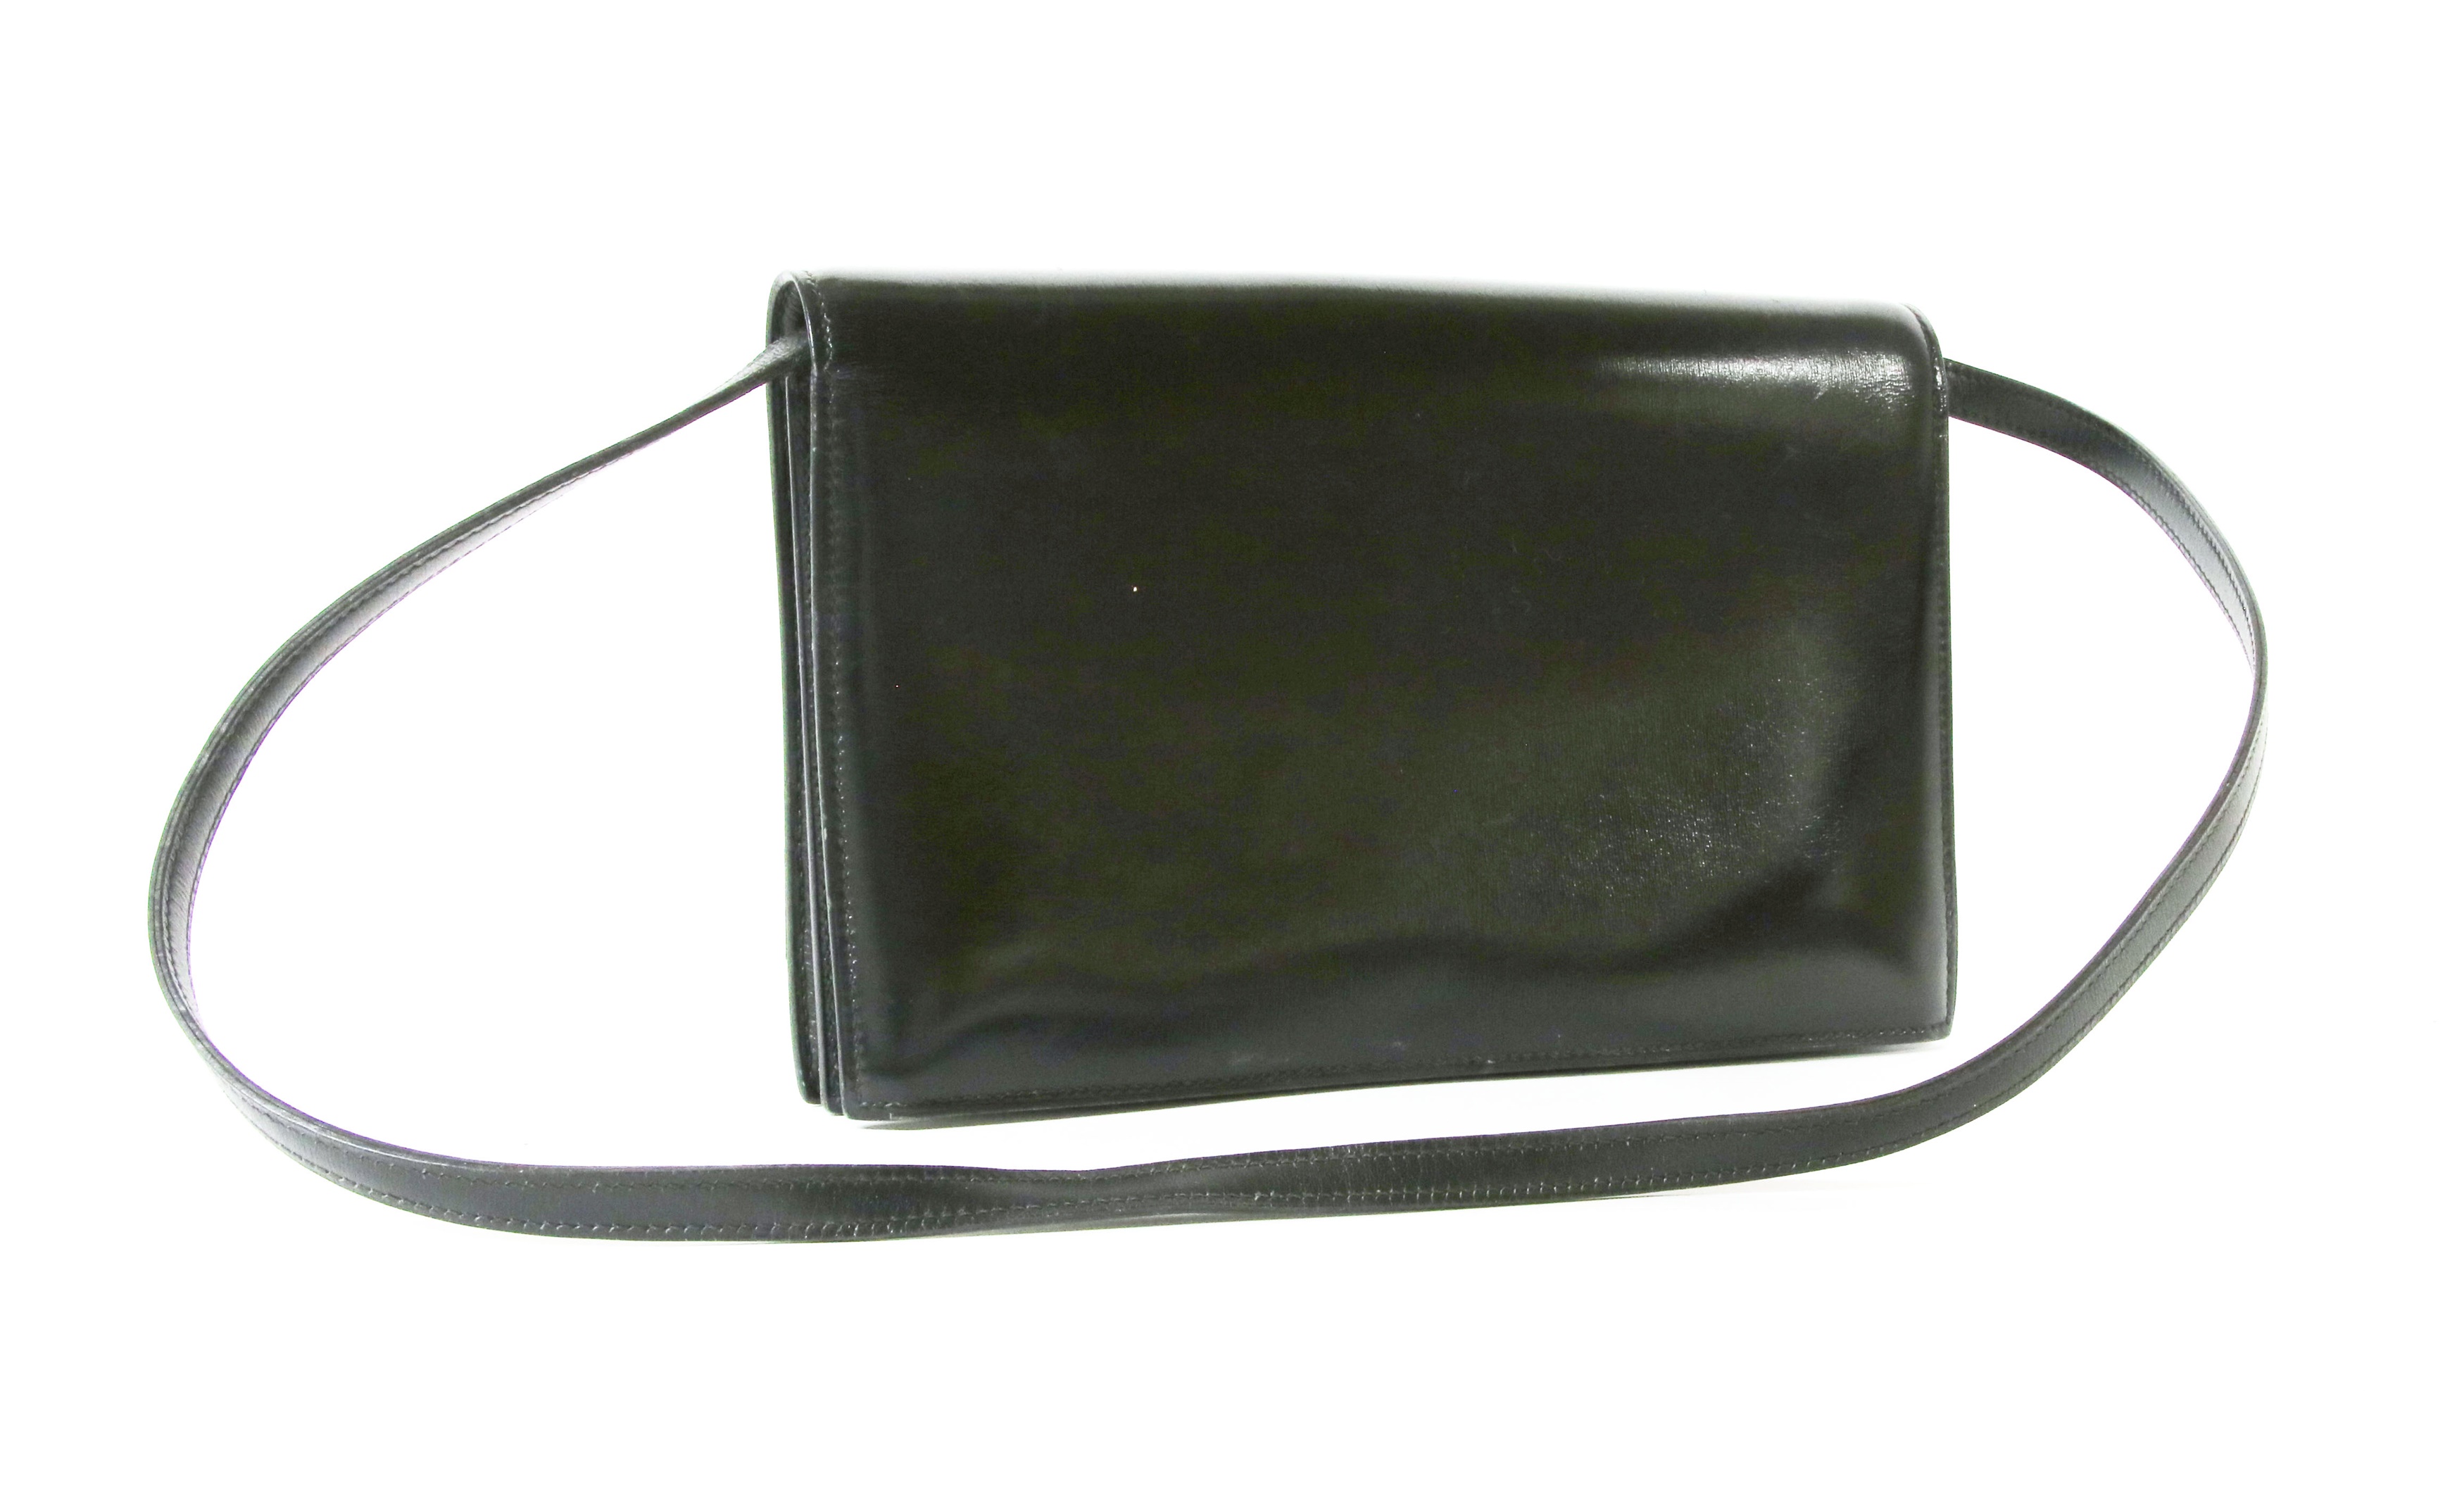 Lot 415 - An Hermès vintage black 'Annie' clutch bag